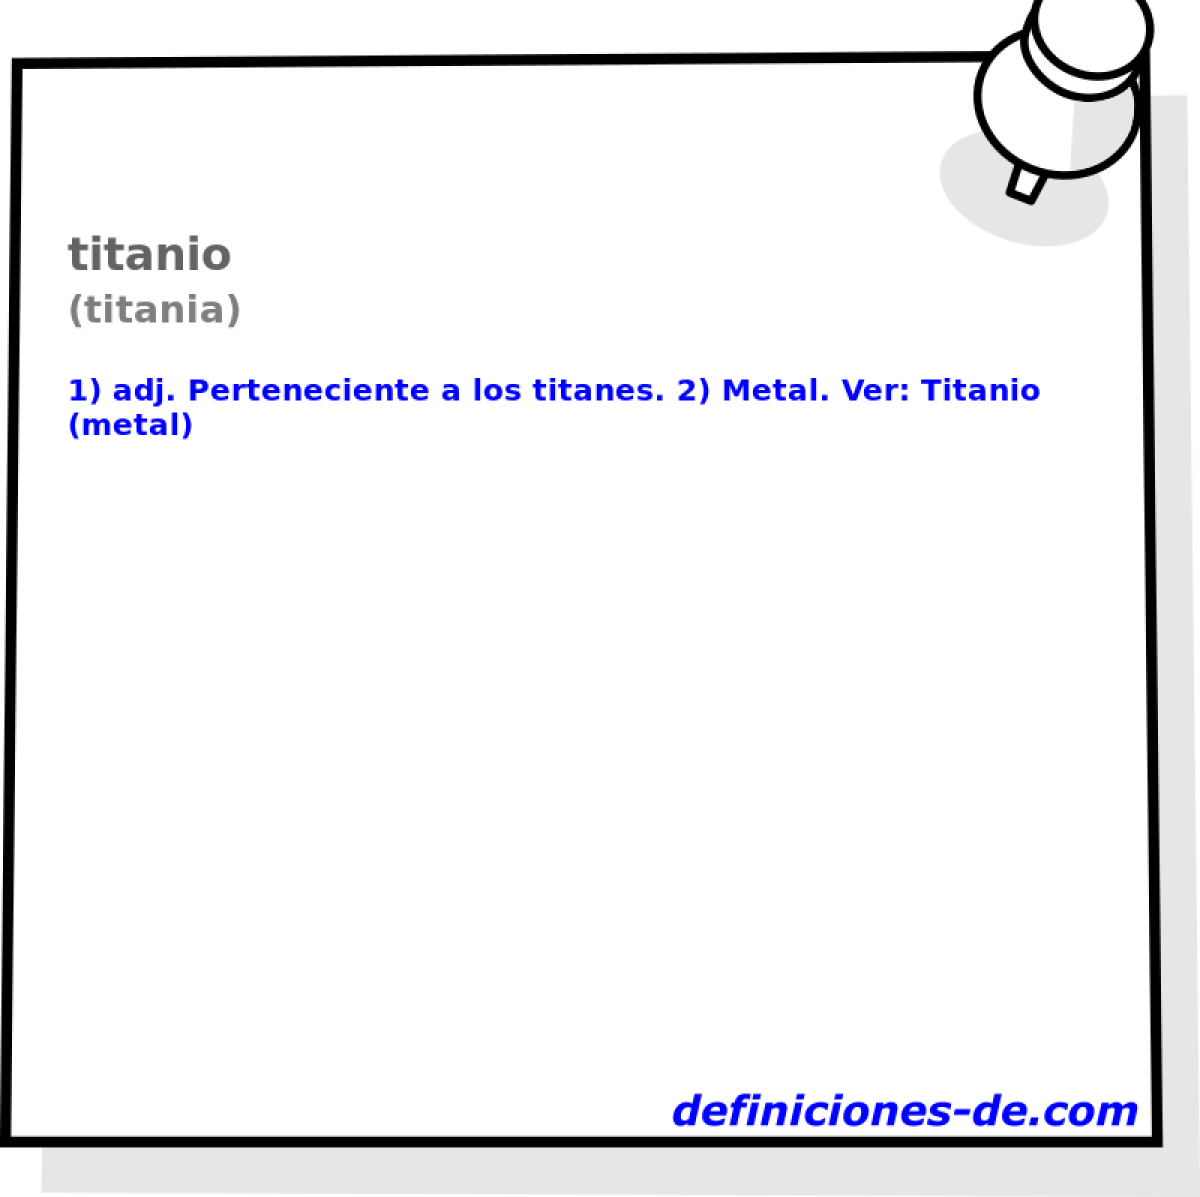 titanio (titania)